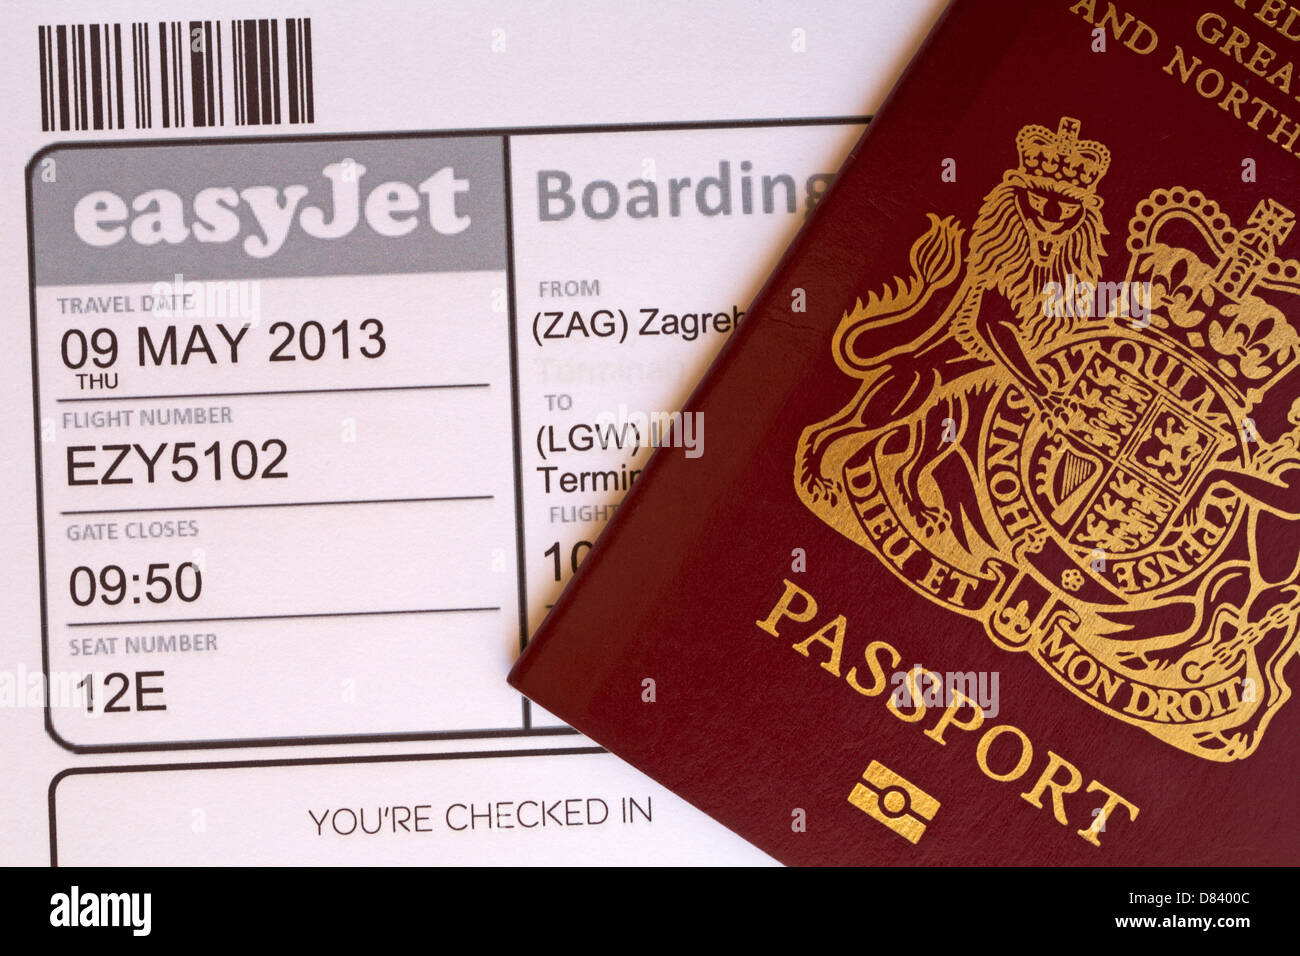 UK passport and Easyjet boarding pass for flight to Zagreb in Croatia Stock Photo